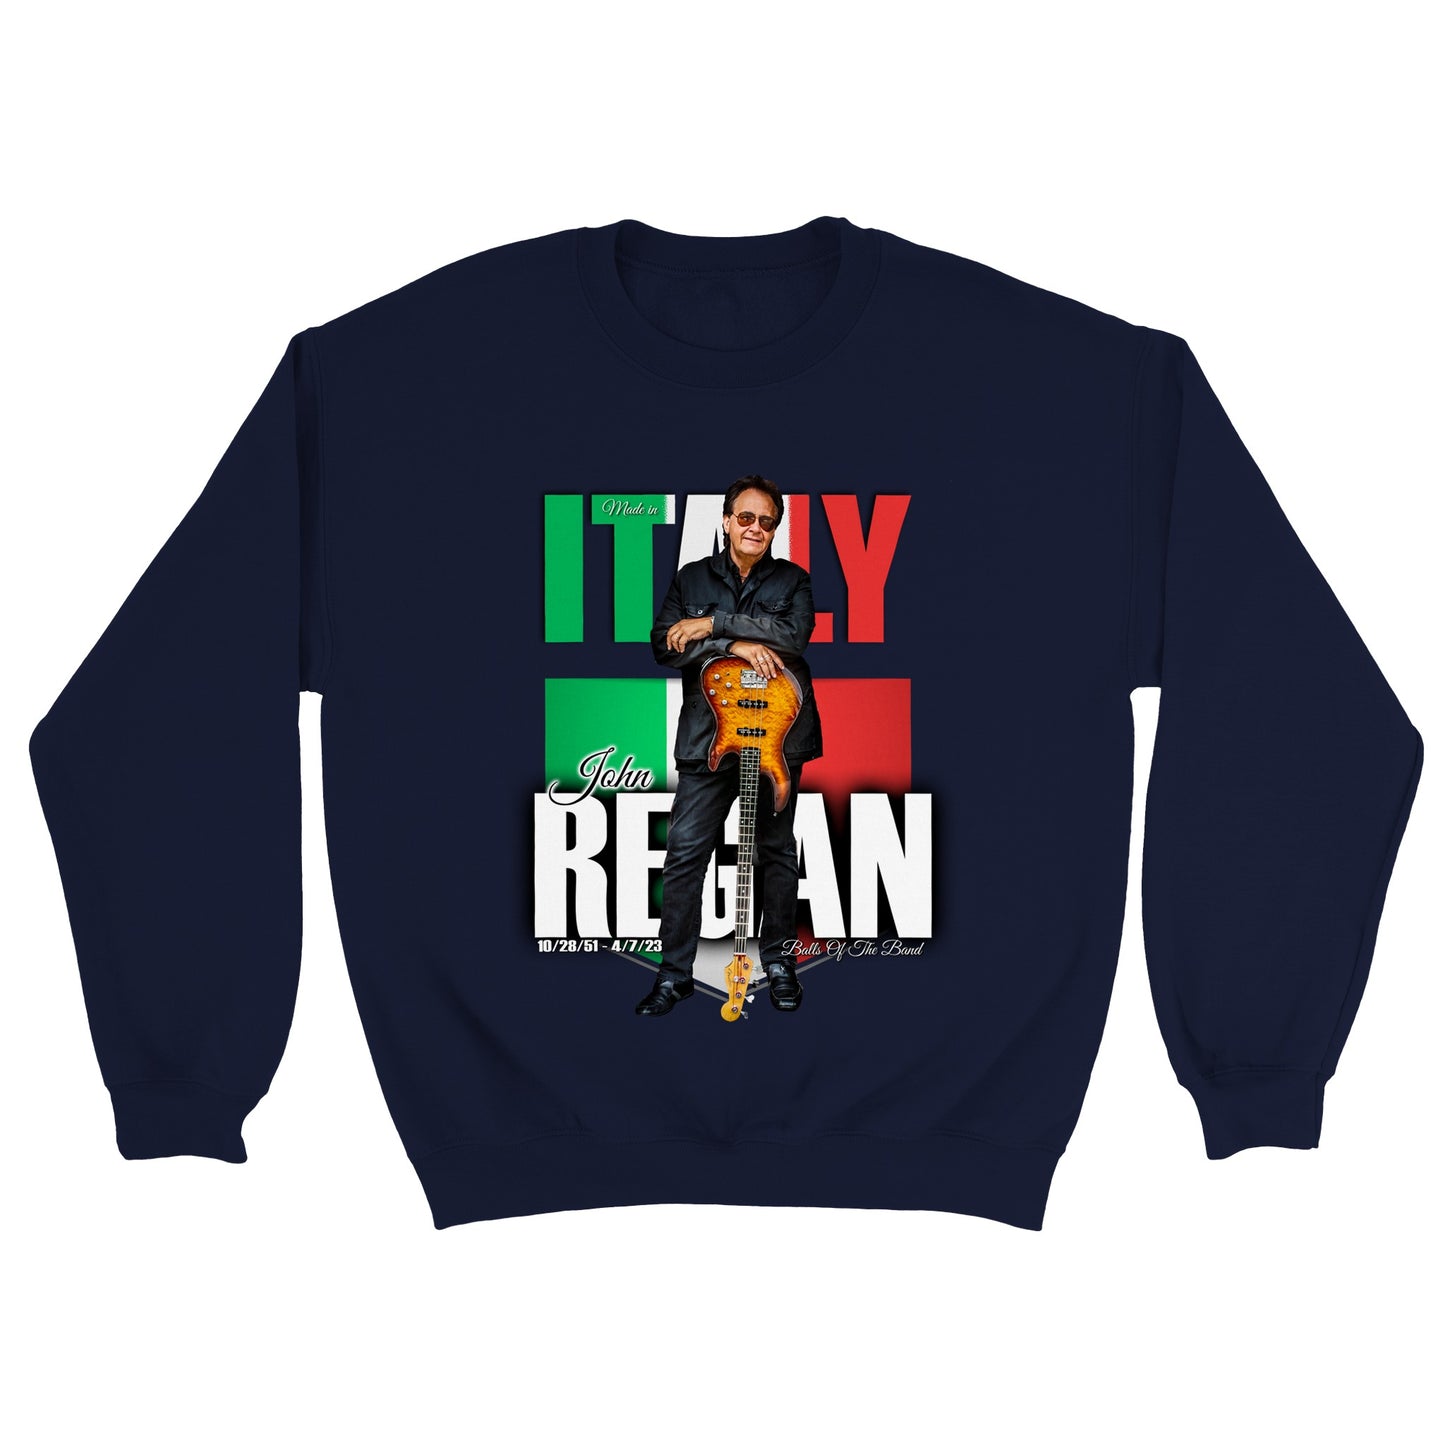 Made In Italy John Regan Classic Unisex Crewneck Sweatshirt